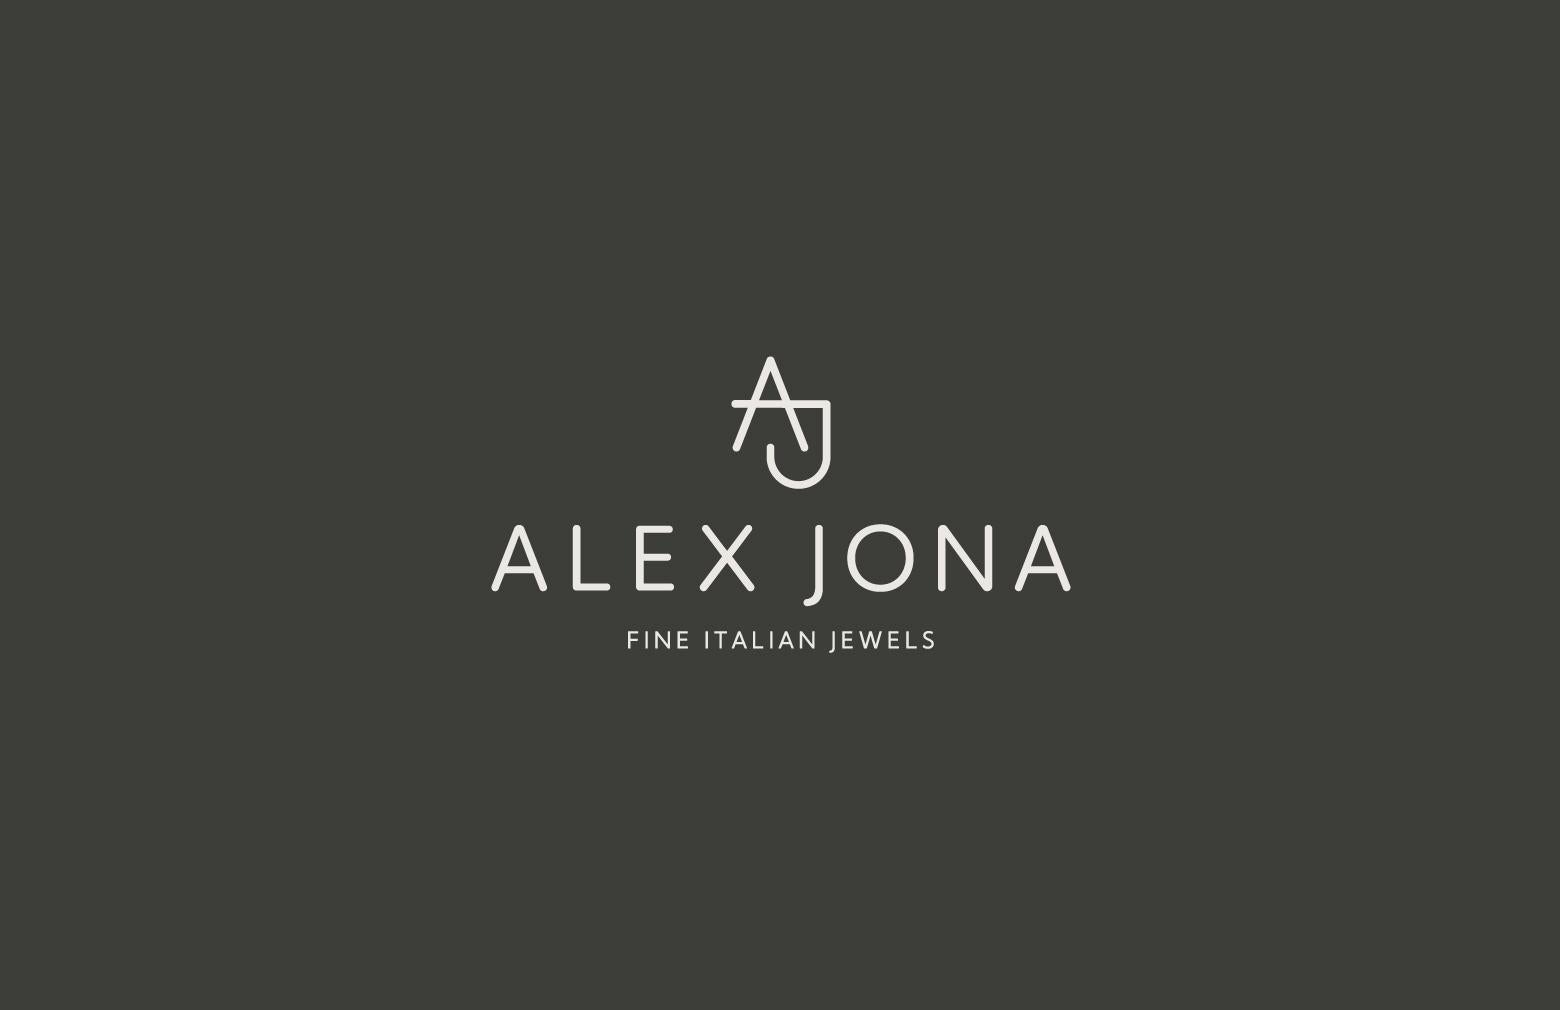 Alex Jona White Diamond 18 Karat White Gold Square Earrings Studs For Sale 3